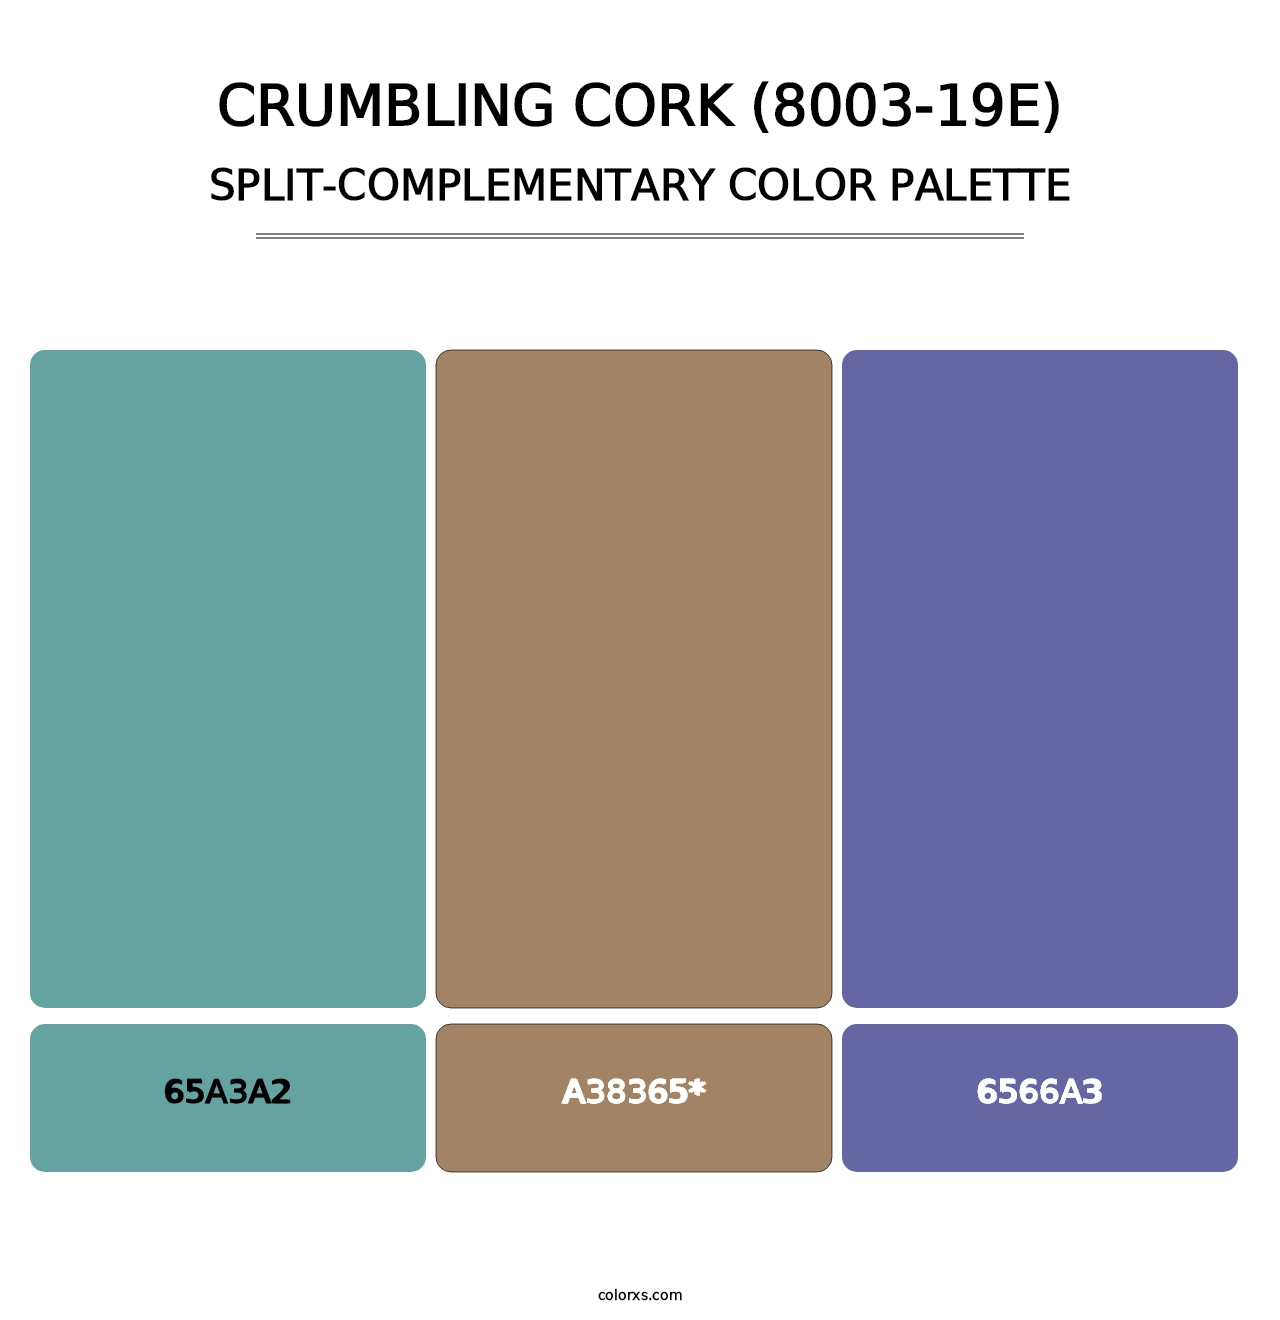 Crumbling Cork (8003-19E) - Split-Complementary Color Palette